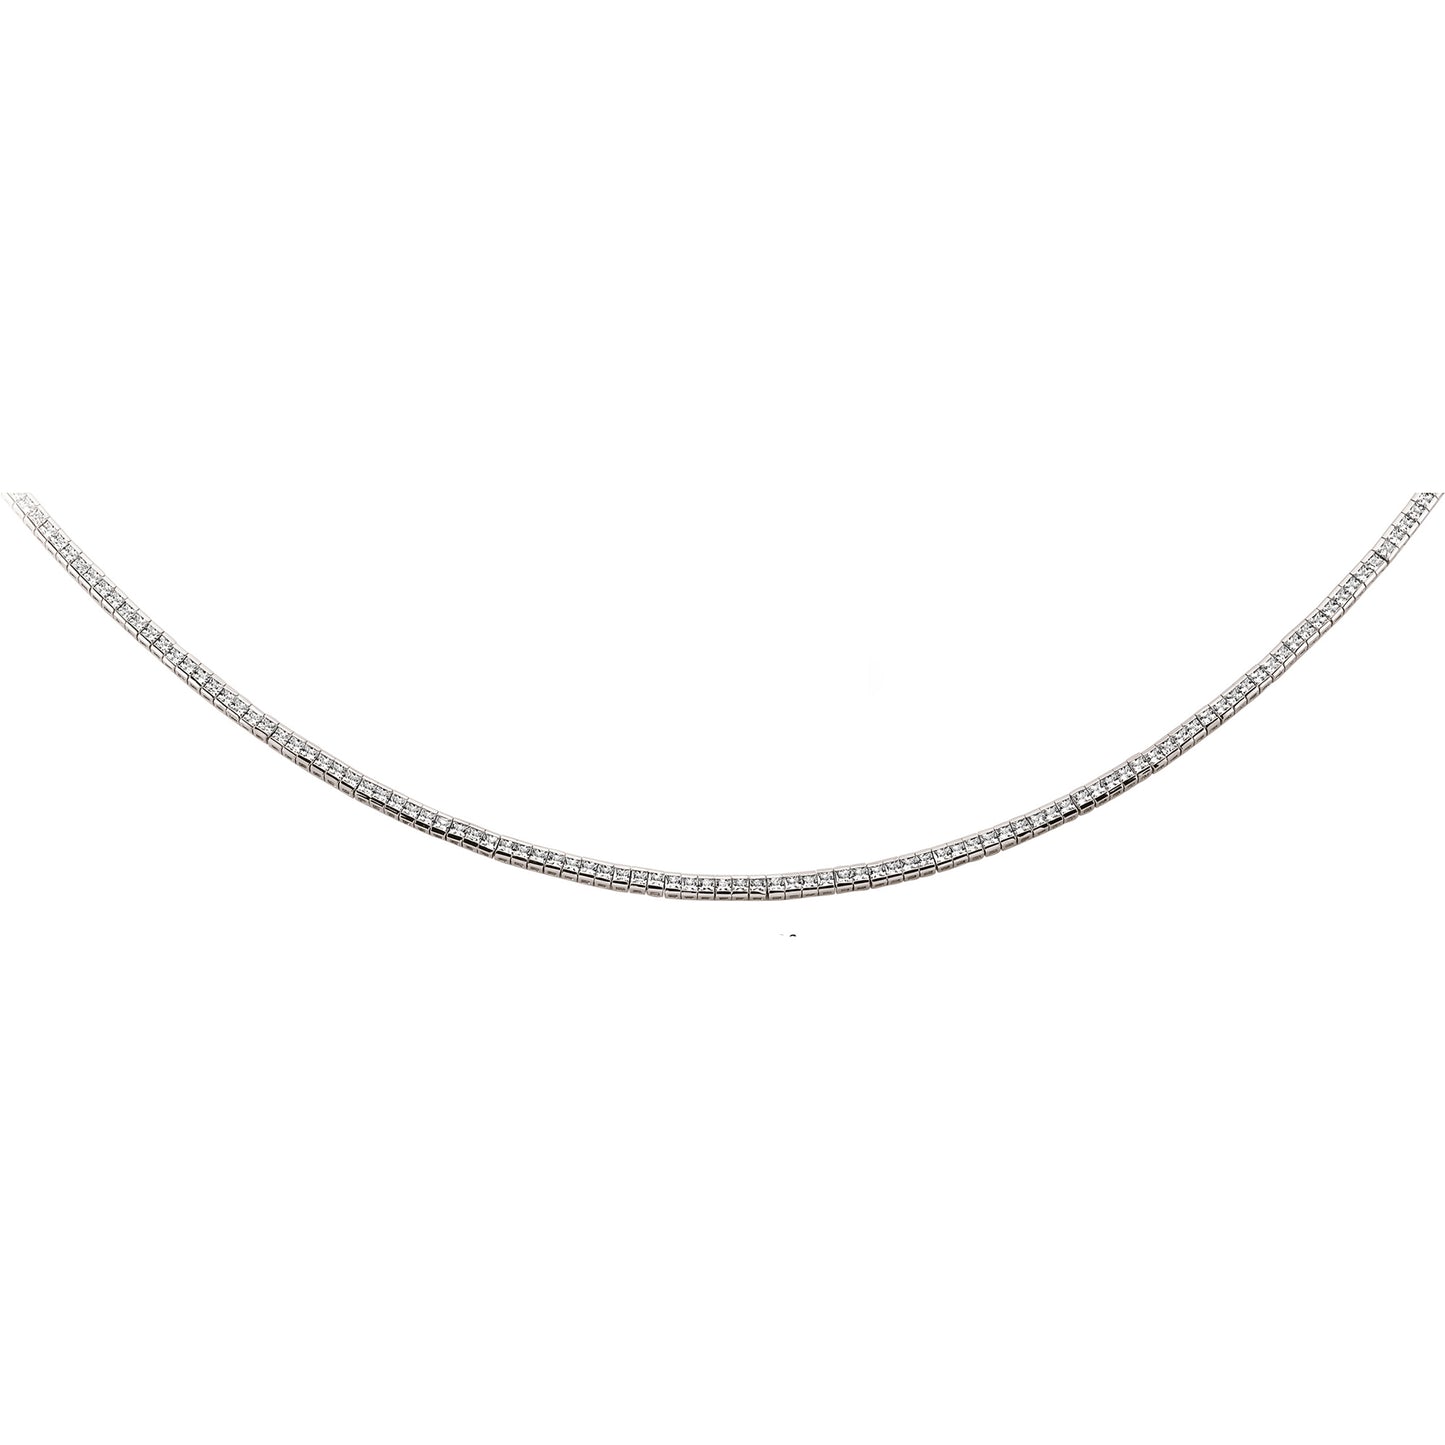 Silver  Princess Cut CZ Eternity Line Necklace 3mm 16 inch - GVK093